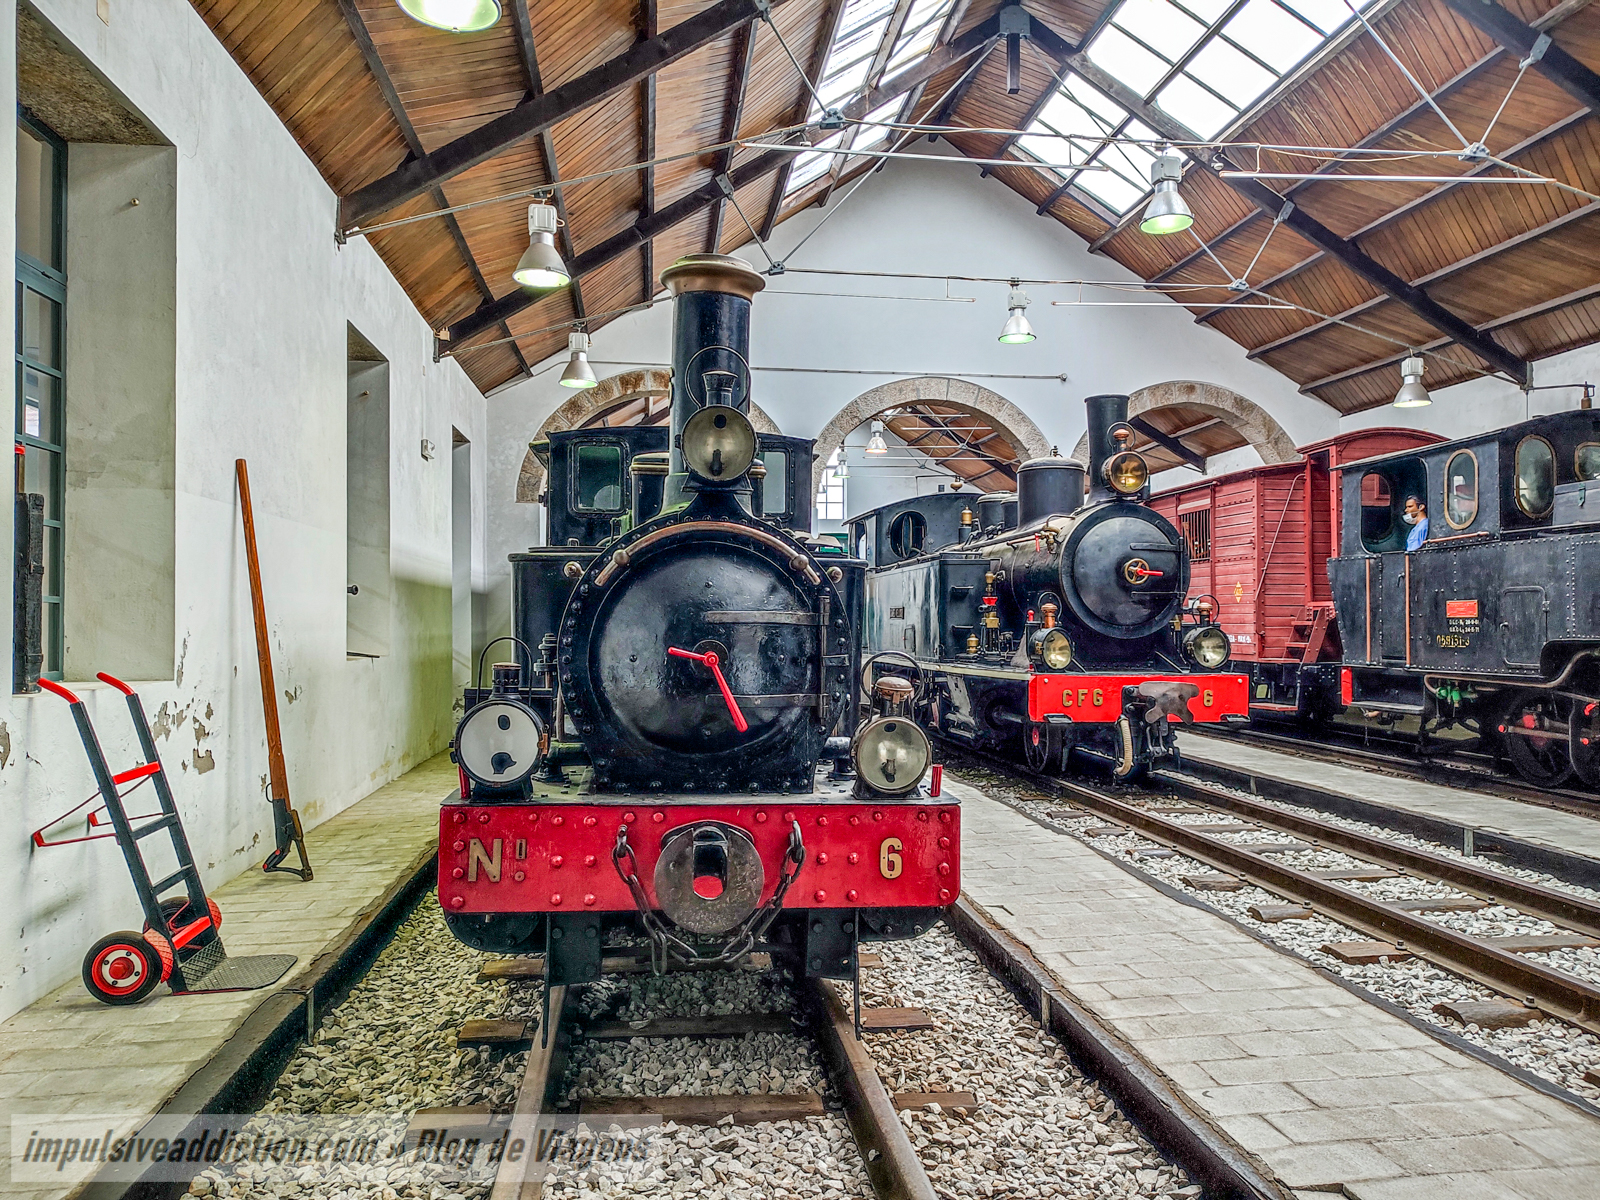 Lousado Railway Museum